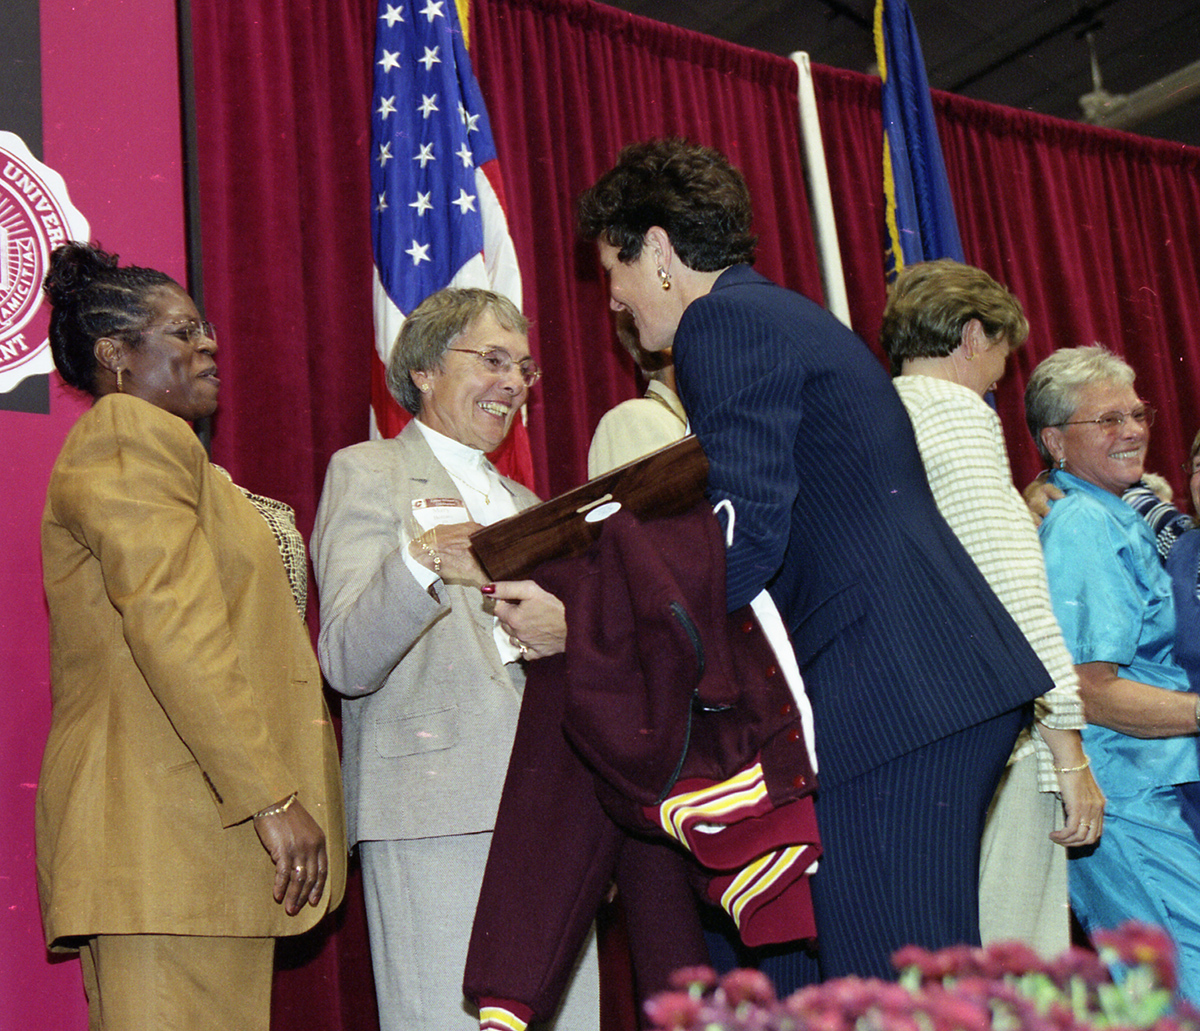 CMU women athletes receiving their varsity letters, 2000